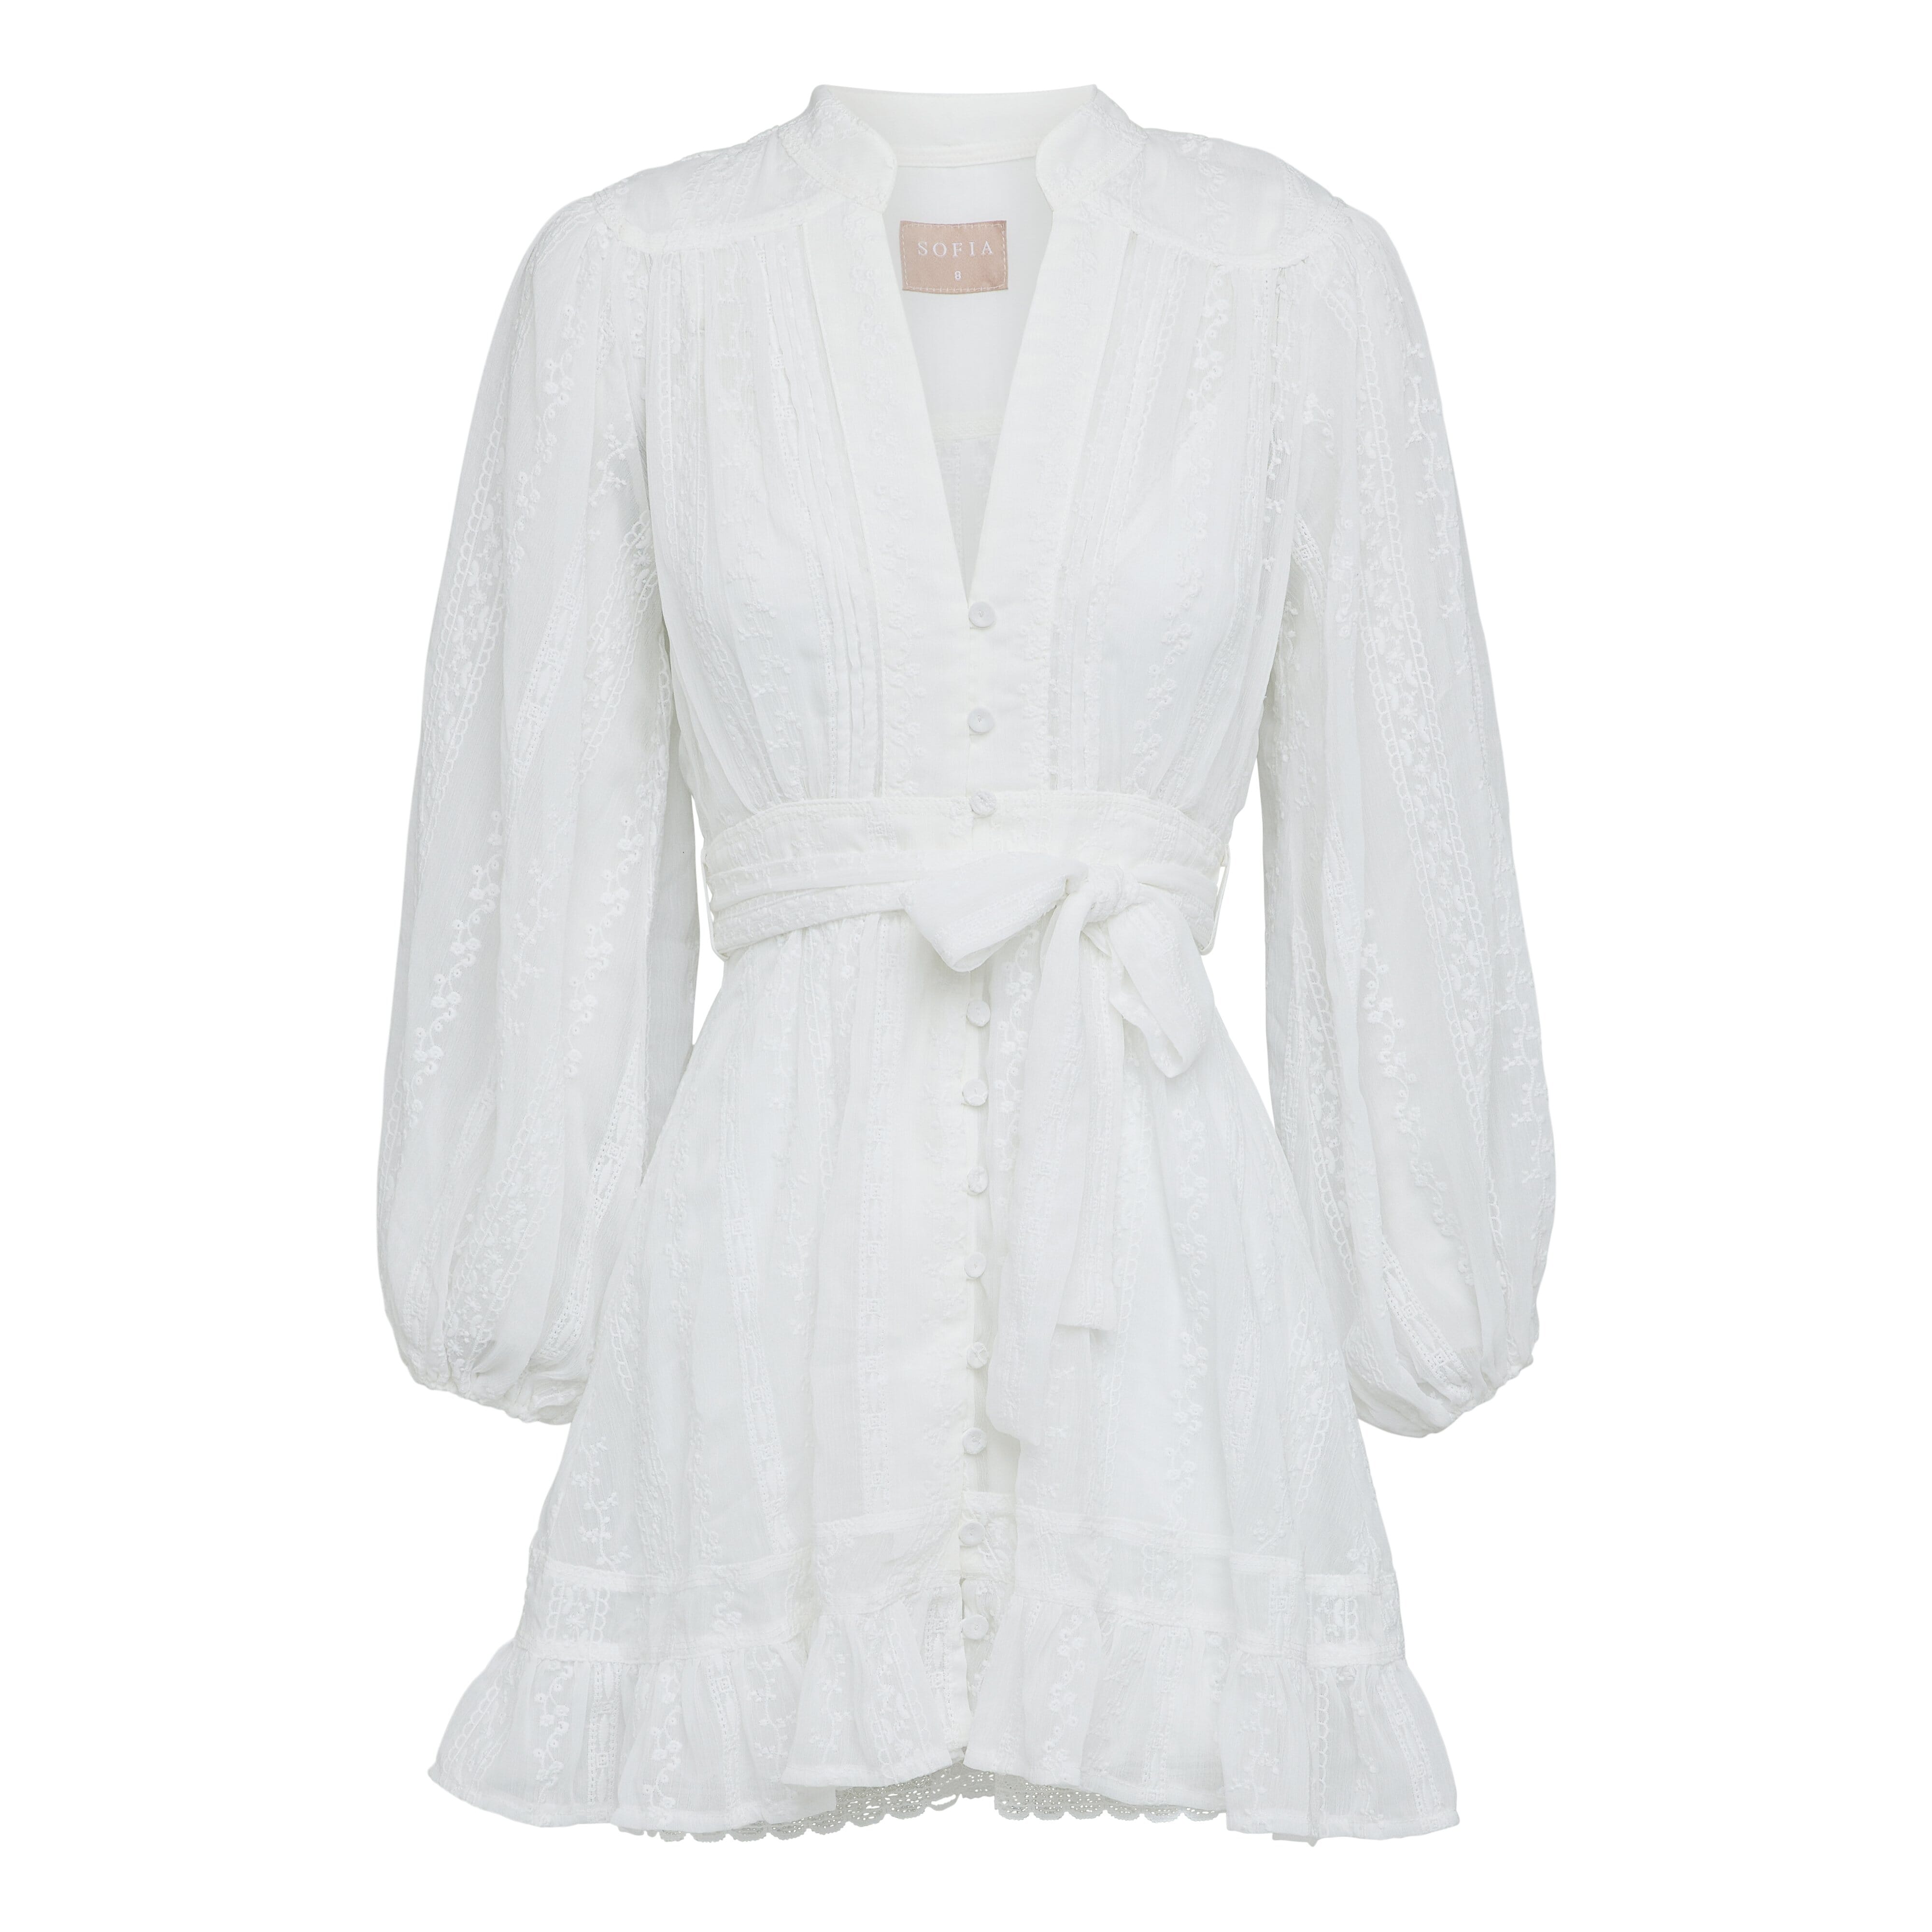 PALERMO DRESS - White Lace Dresses SOFIA The Label 